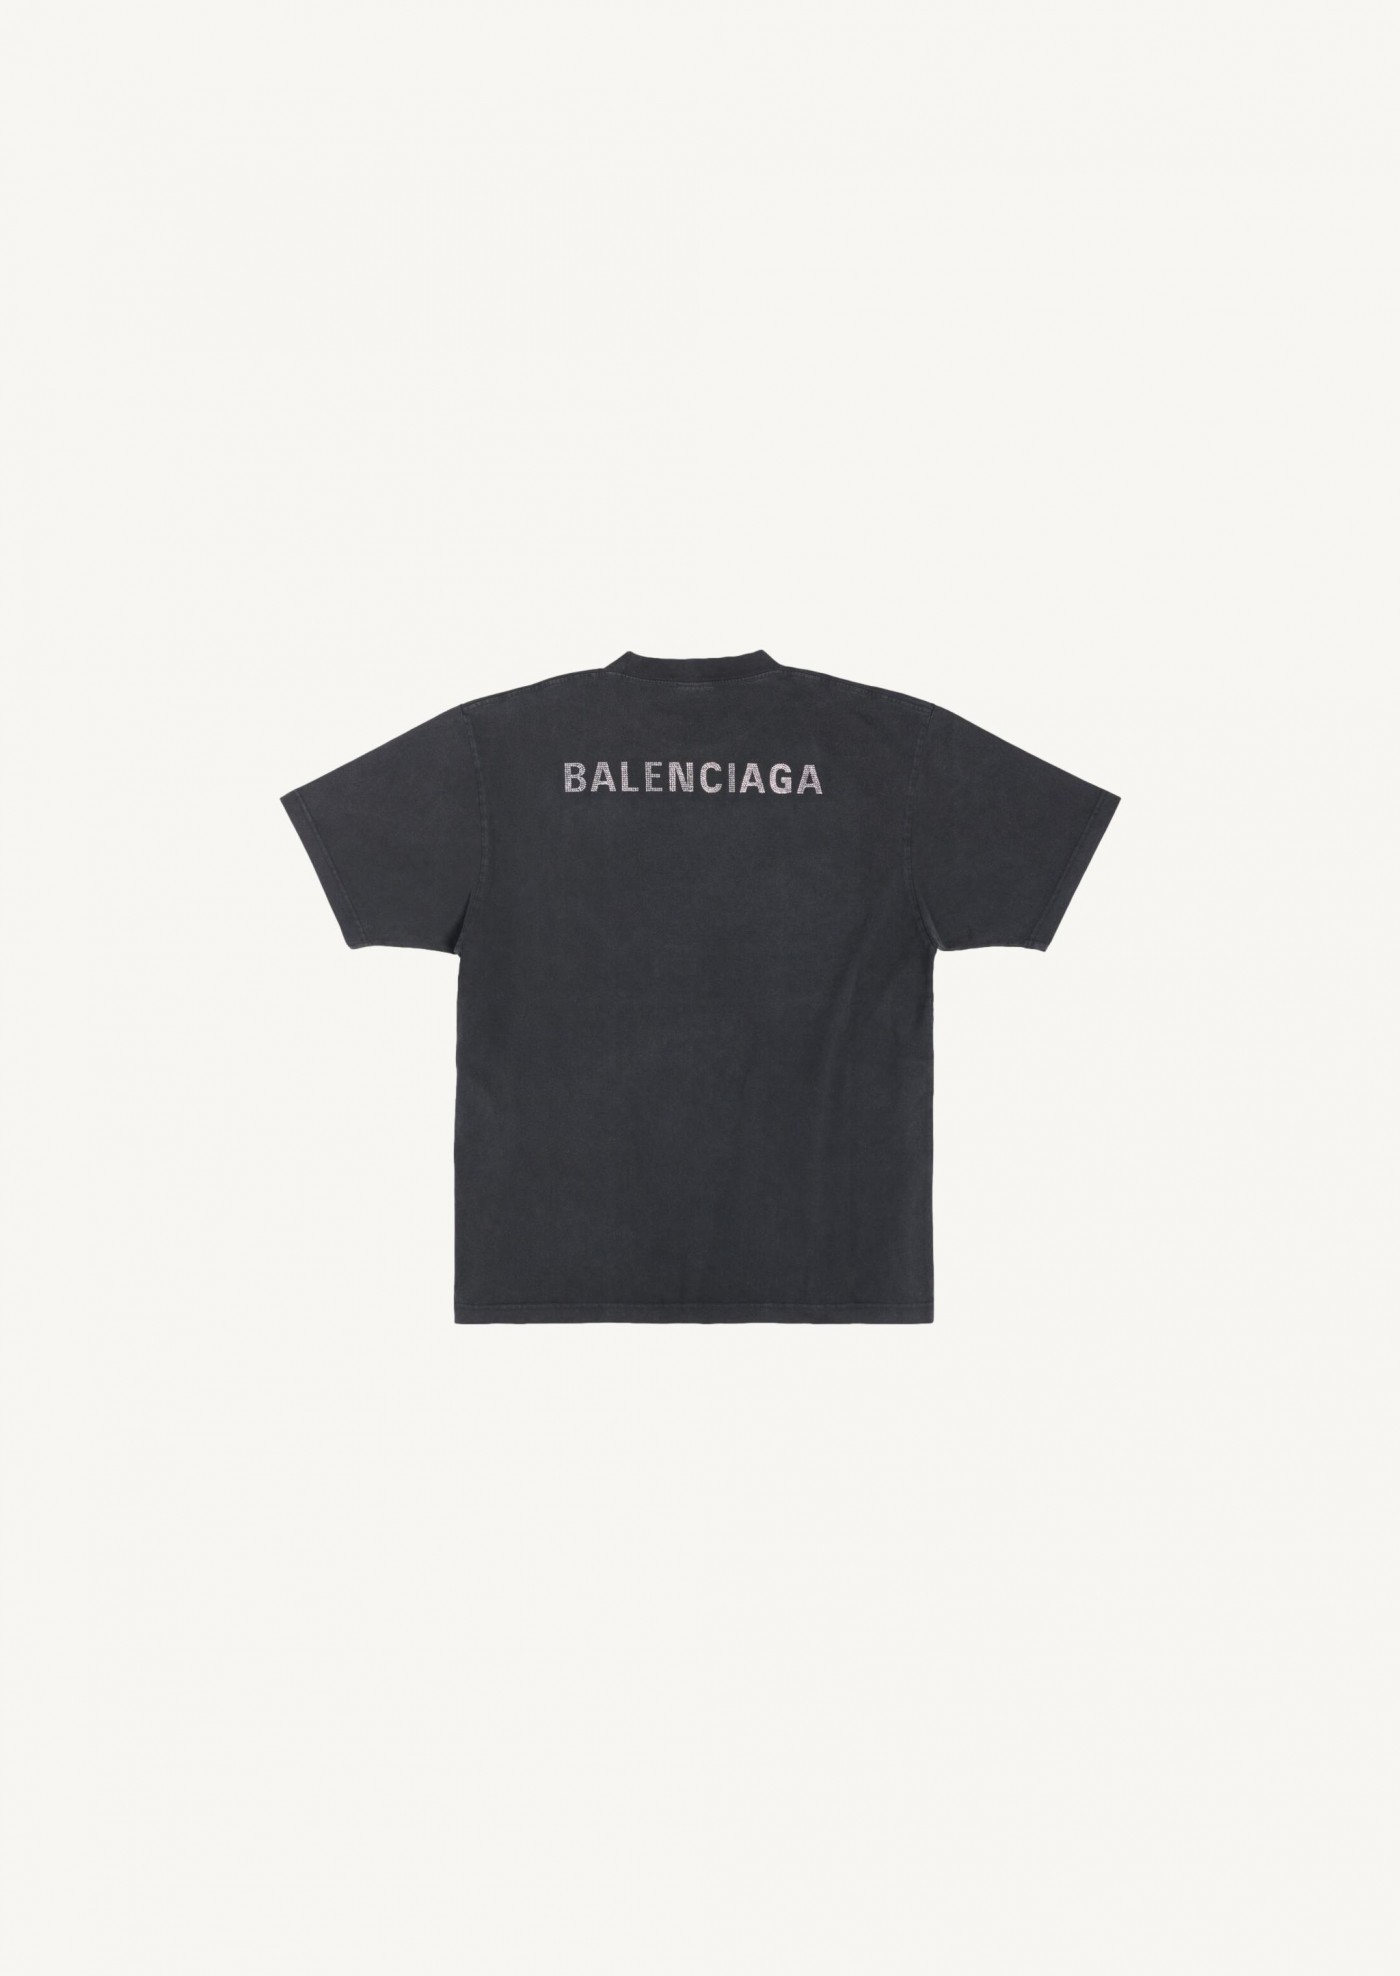 Women's balenciaga back t-shirt large fit in black